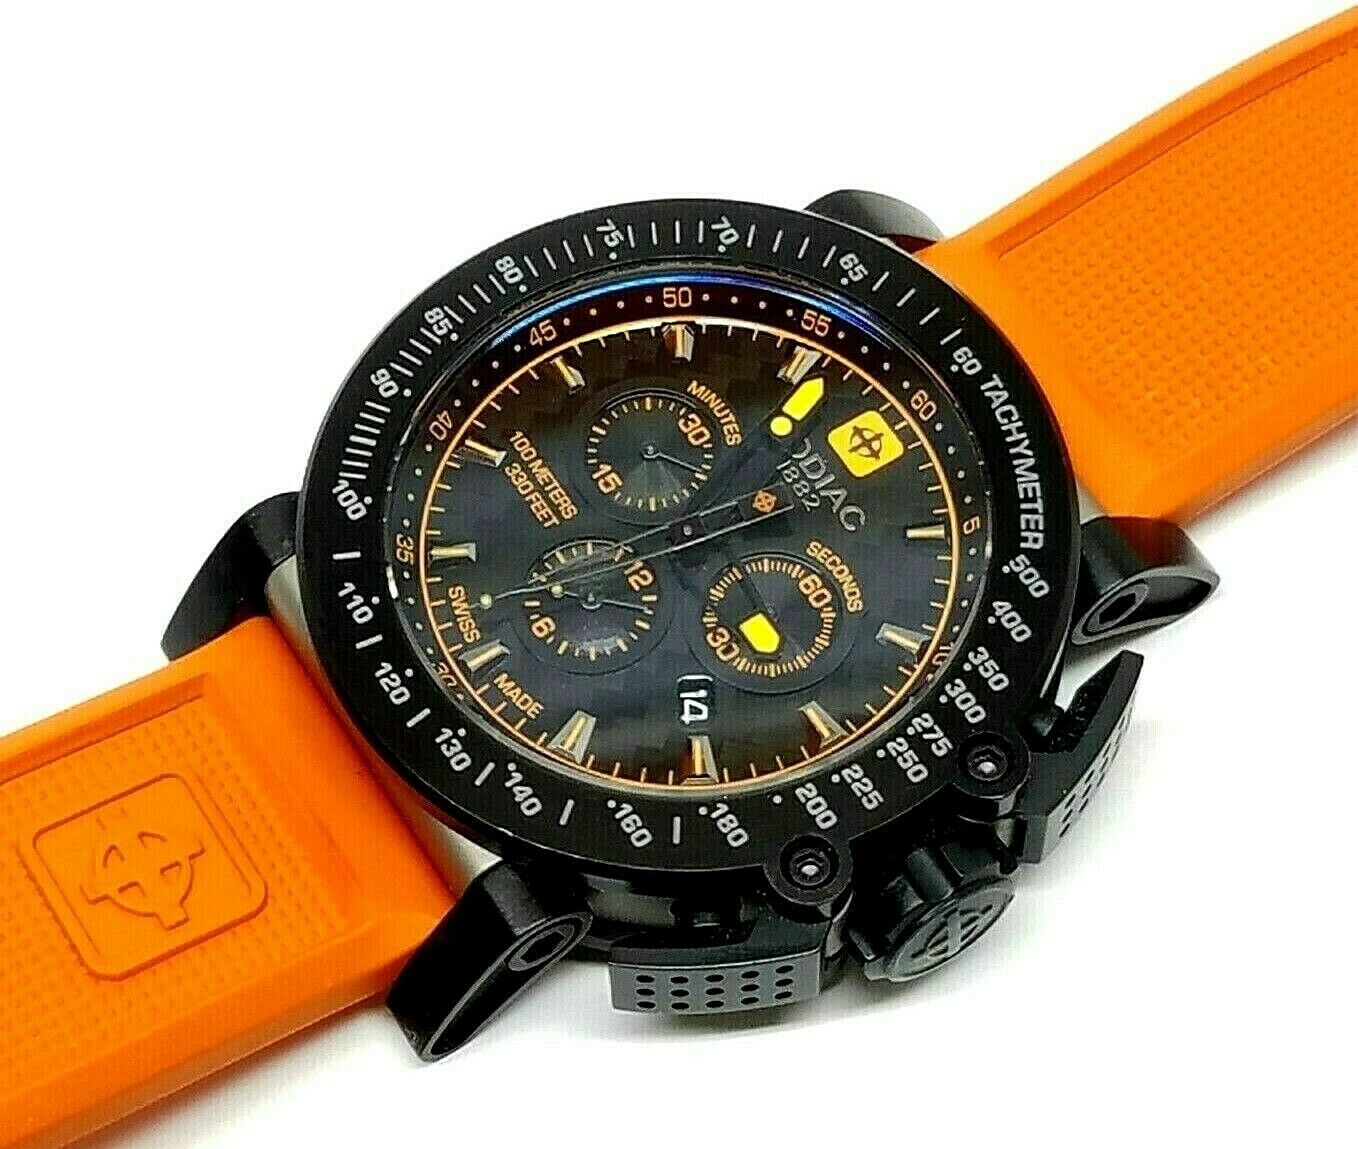 Zodiac Racer ZMX 02 ZO8535 Swiss dive Watch ONLY 250 MADE Limited